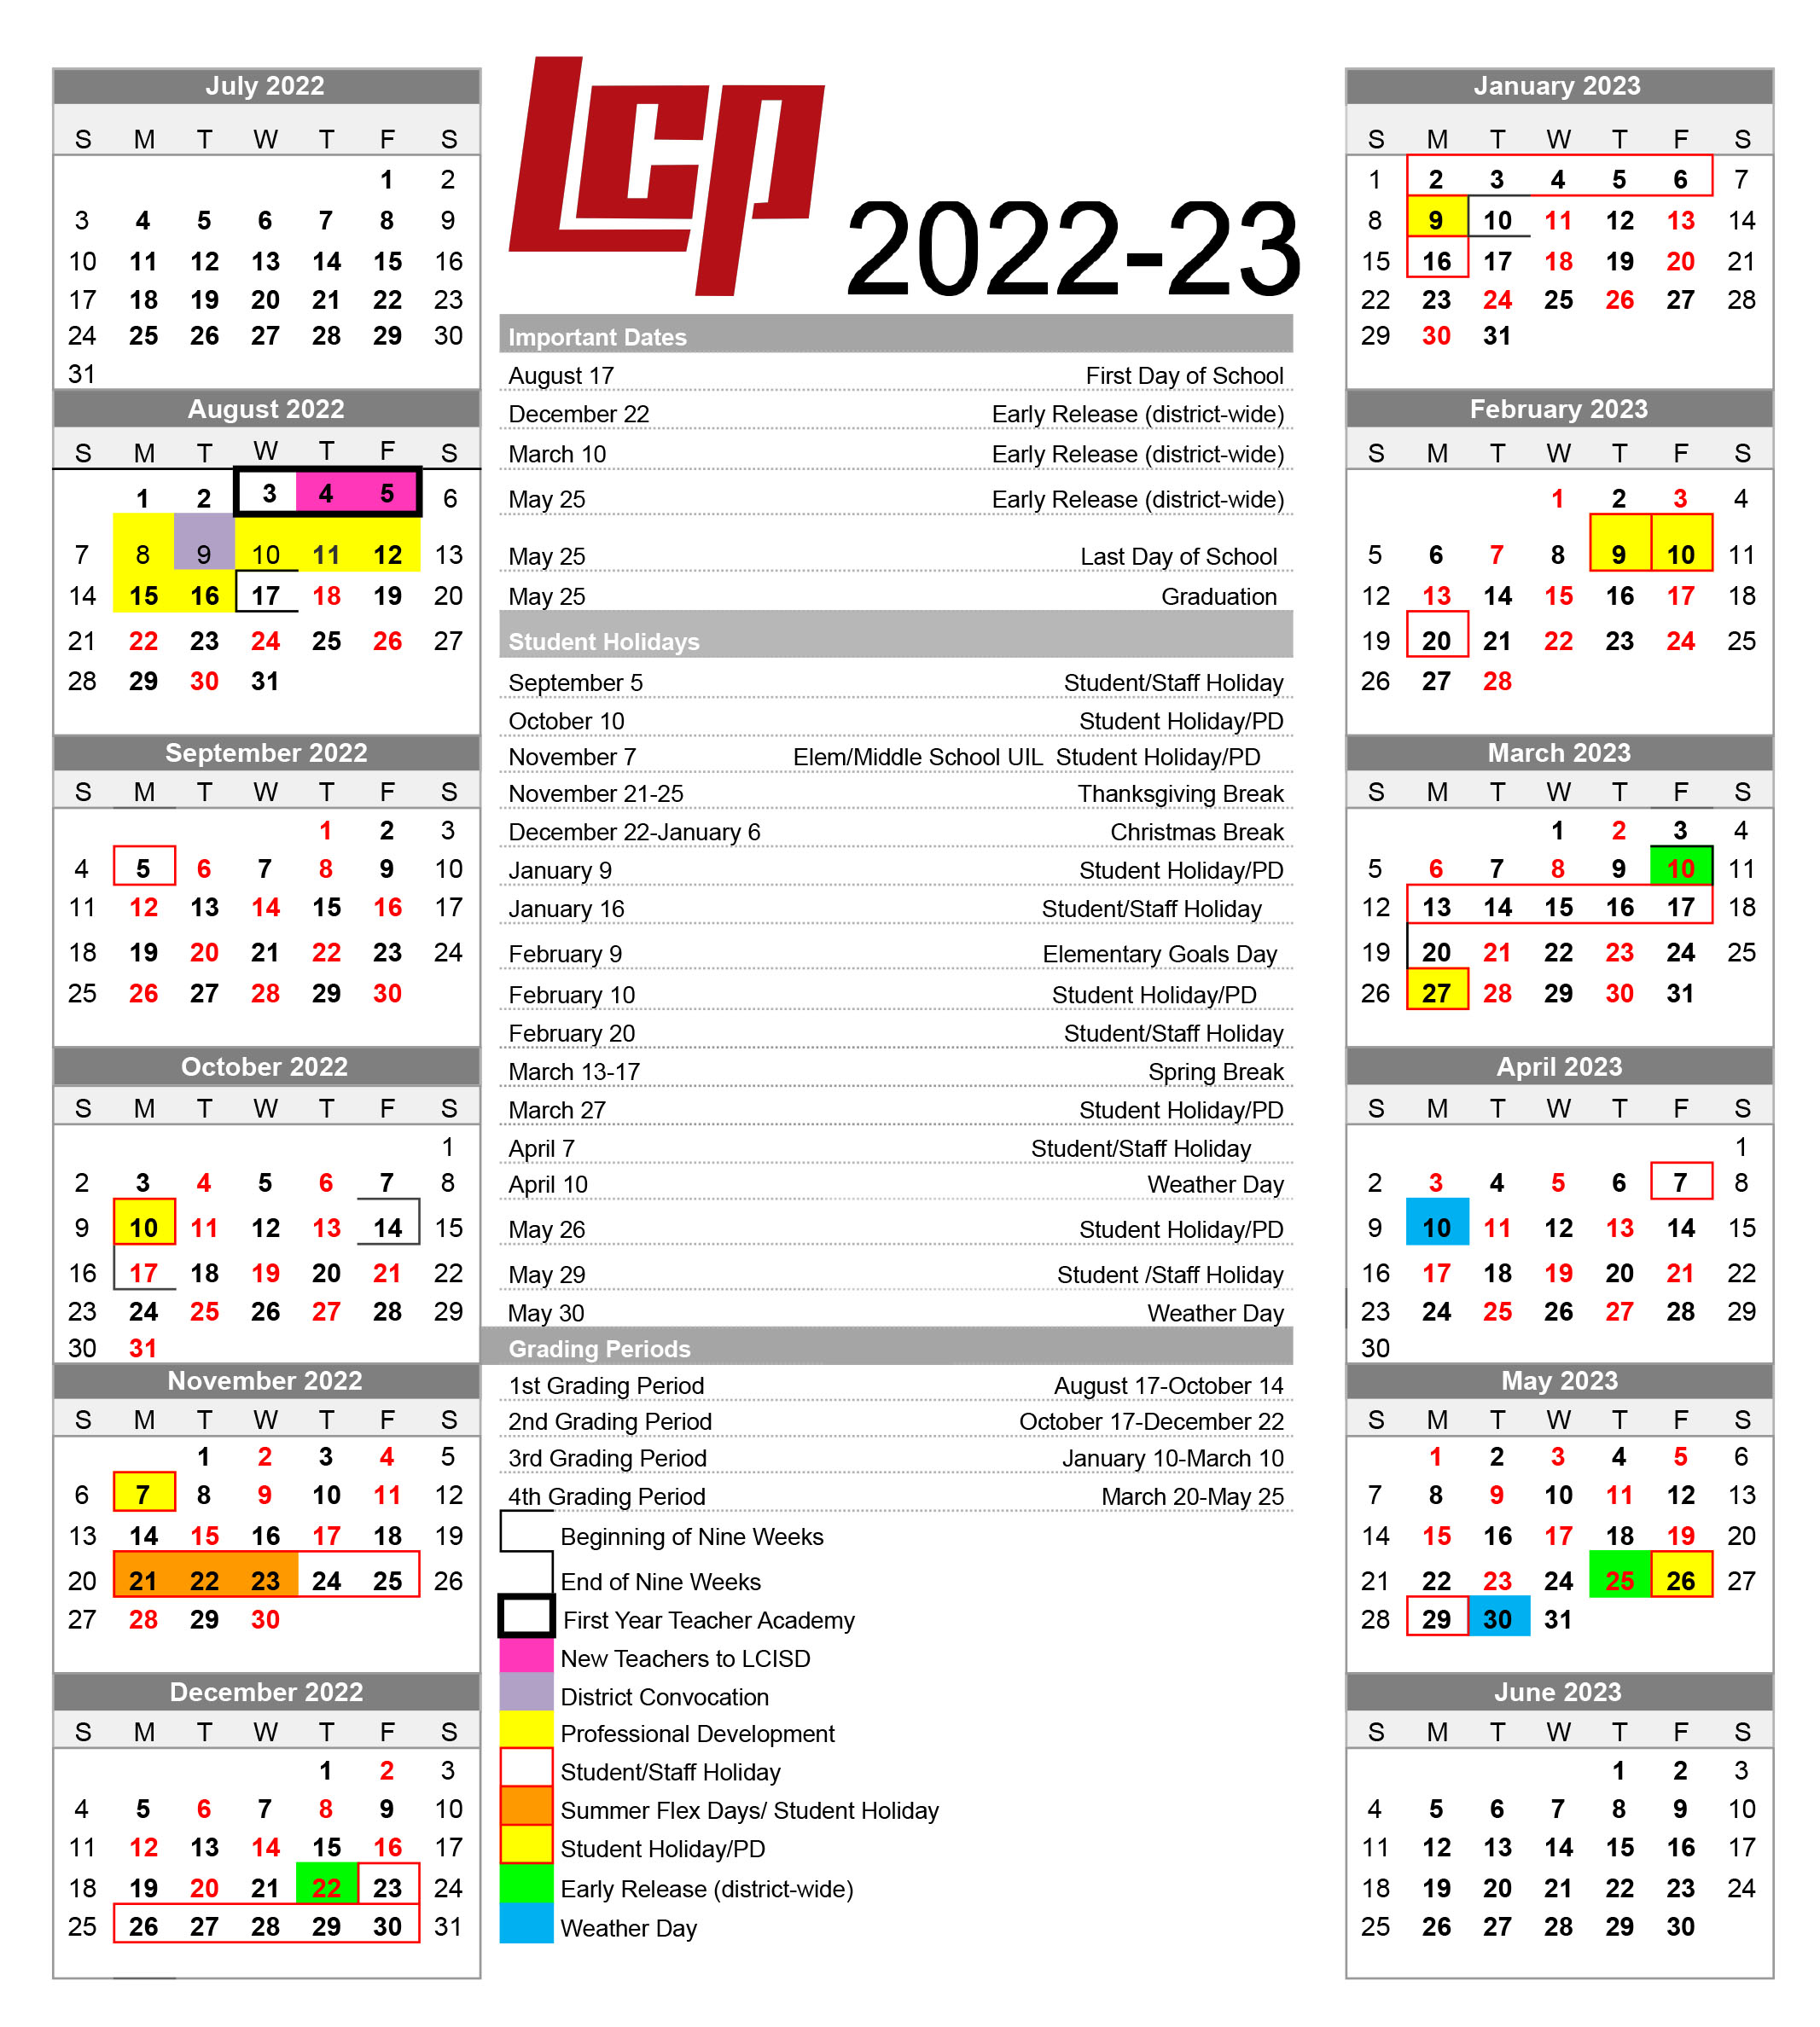 2022-2023 District Calendar 